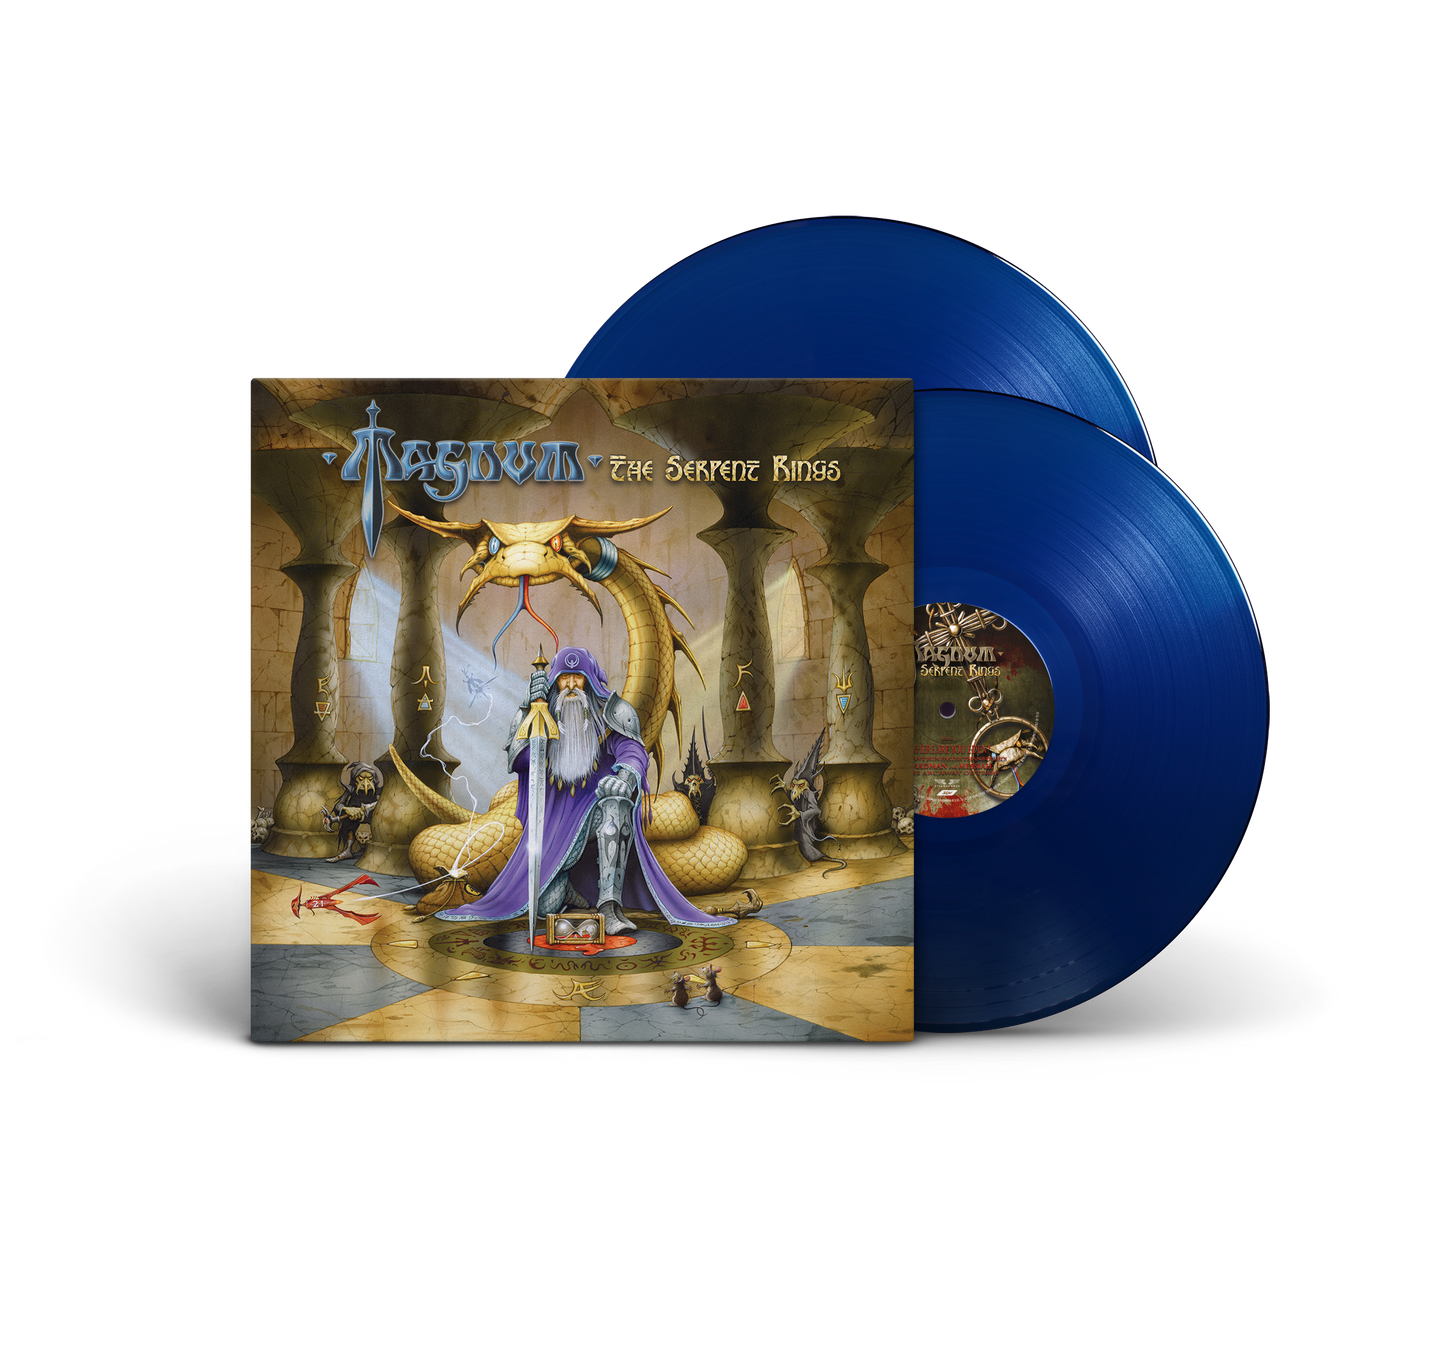 Magnum "The Serpent Rings" LP (blue vinyl)